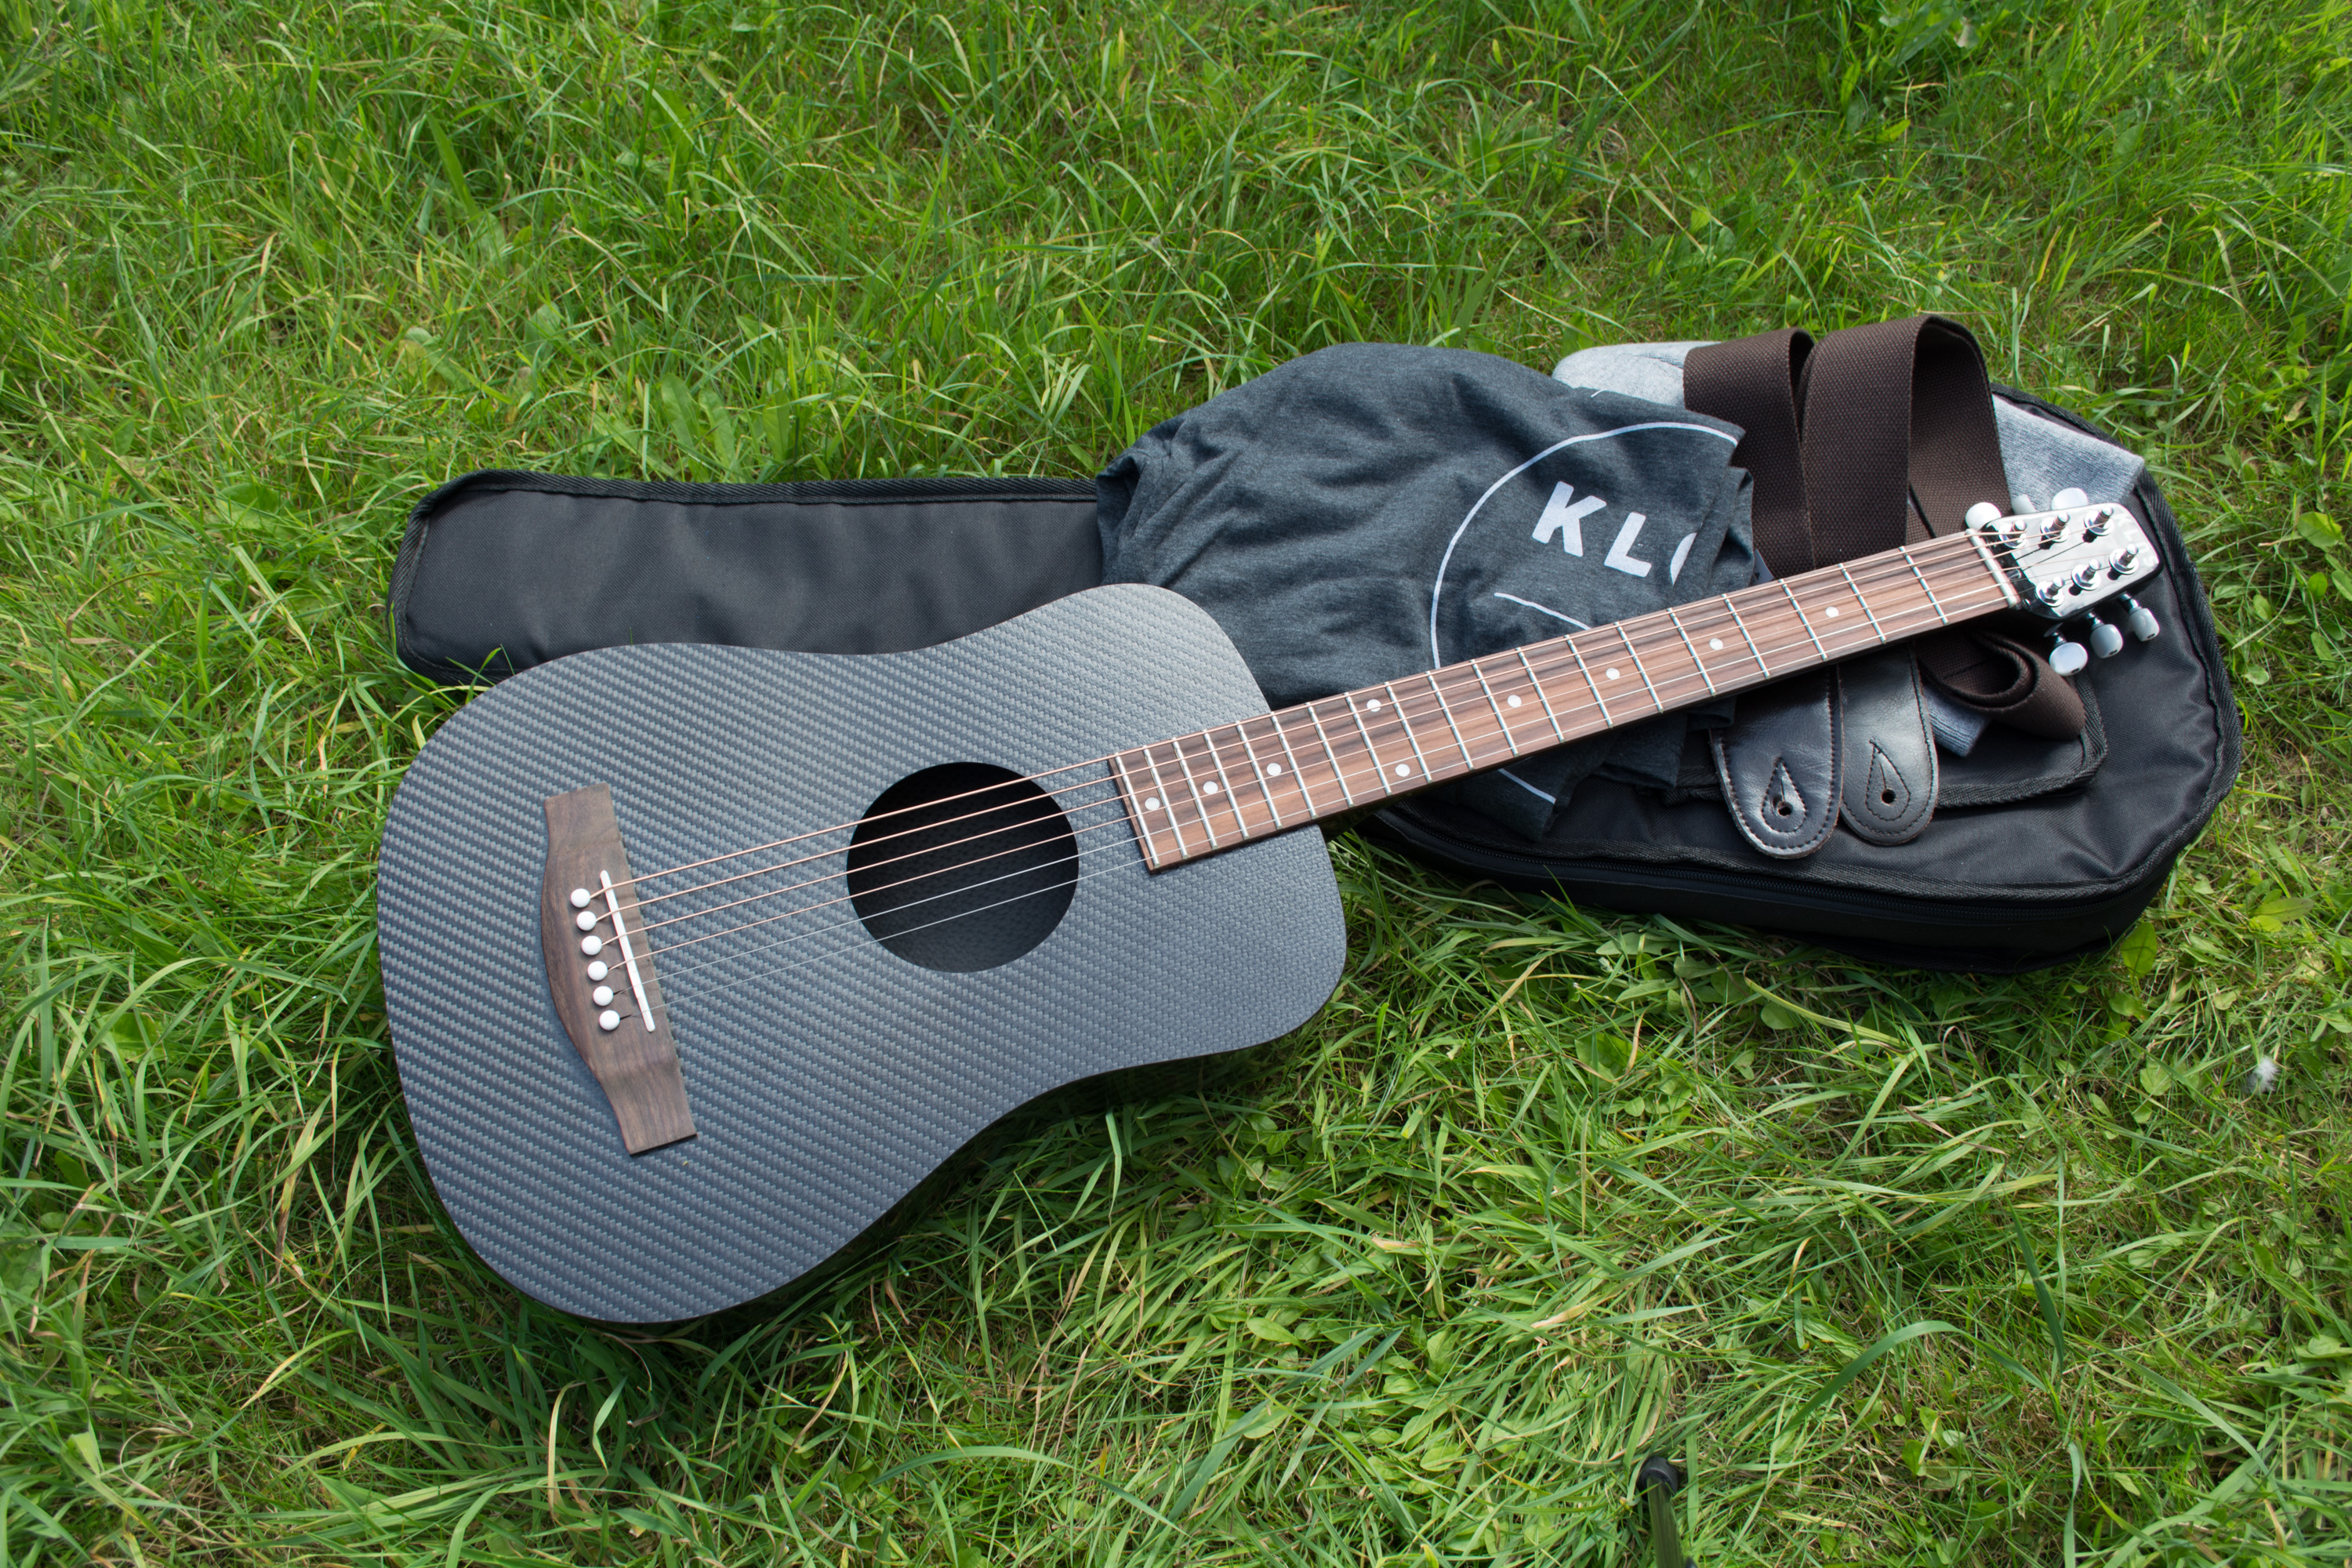 KLŌS 2.0 Carbon Fiber Travel Guitar Bundle on Grass